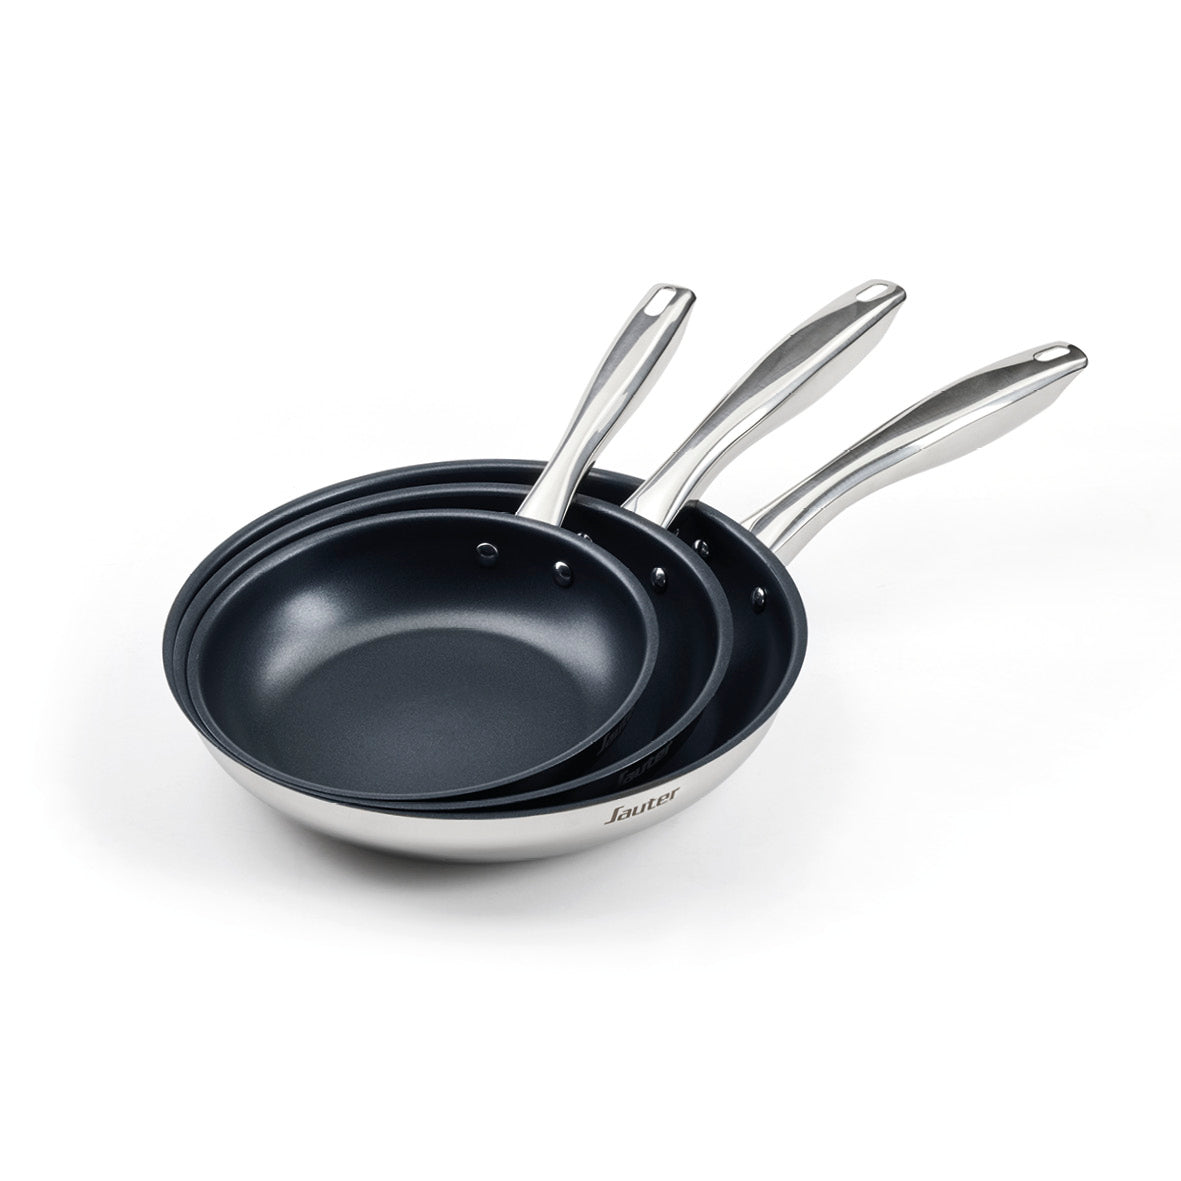 Set of 3 fry pans Qulinox Pro - anti-stick coating - stainless steel - 20 + 24 + 28 cm